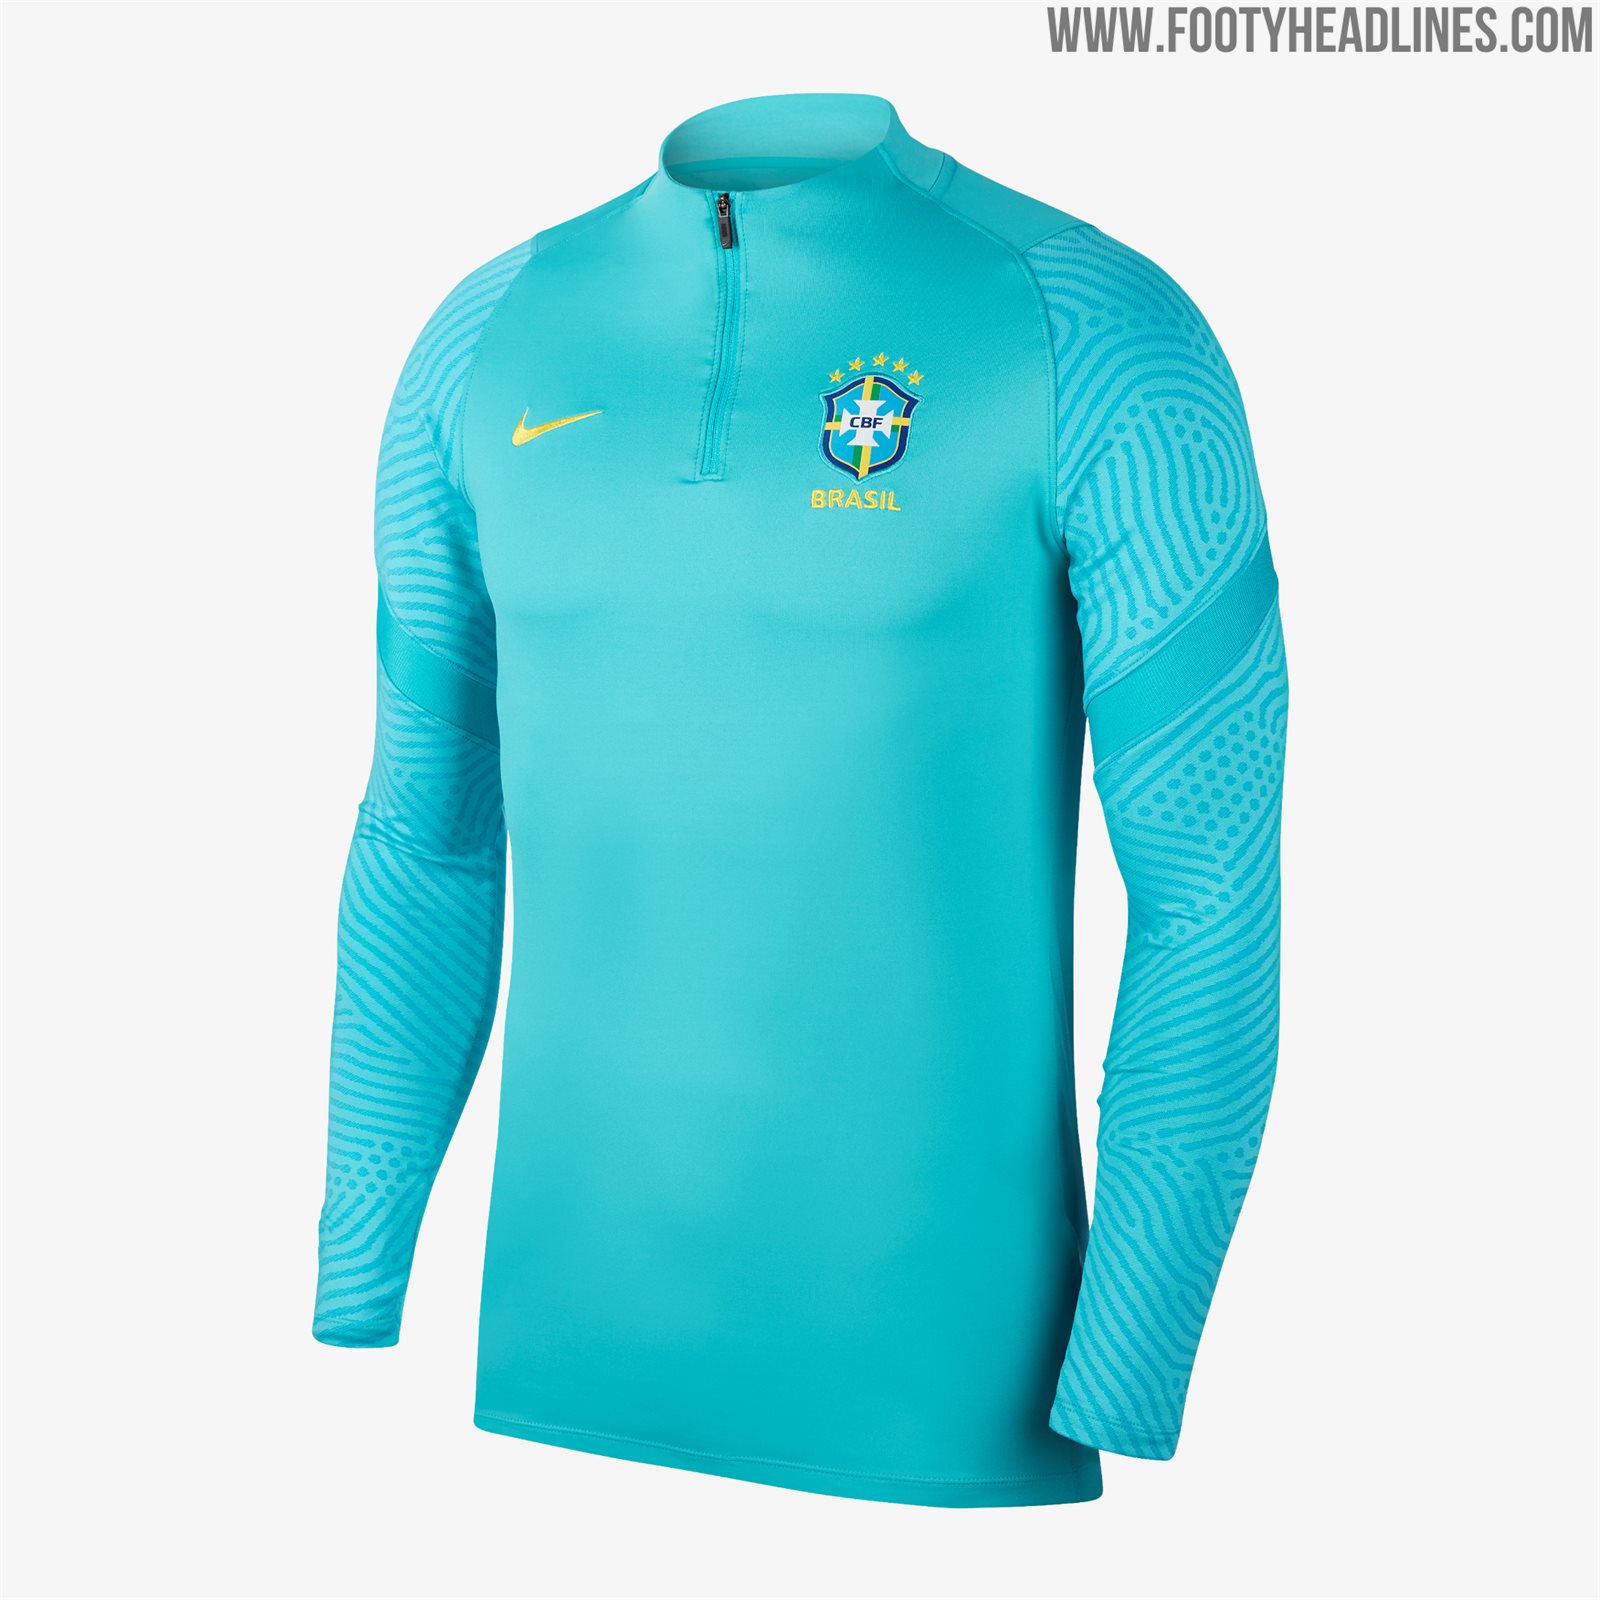 All Nike 2020-21 Training Kits: Brazil, England, France, Portugal